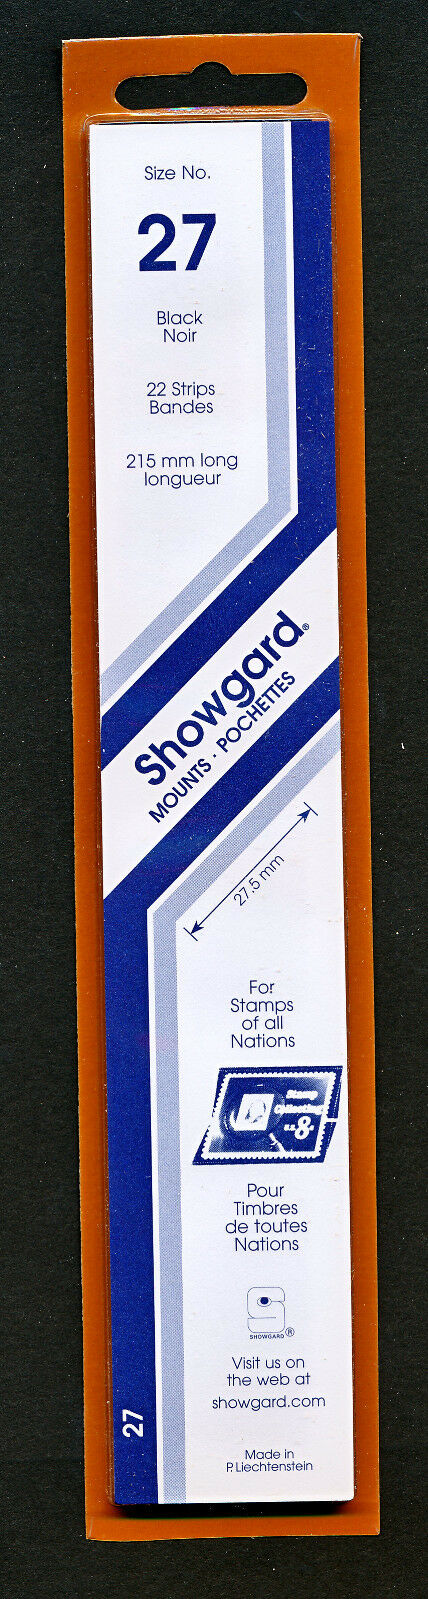 Showgard Stamp Mount Size 27/215mm - Black  (pack Of 22) (27x215  27mm)  Strip